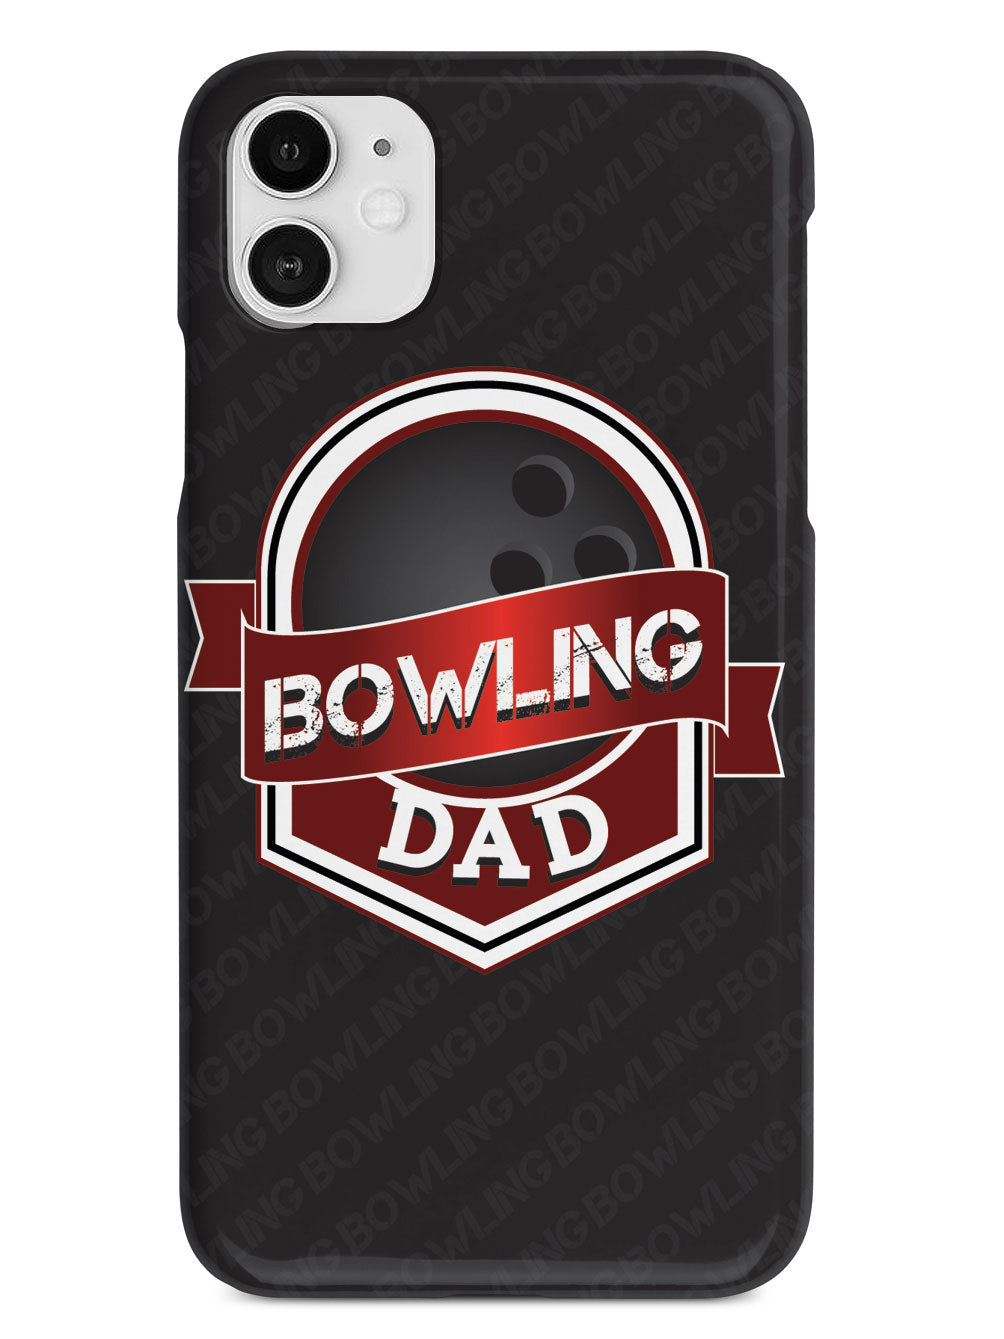 Bowling Dad Case